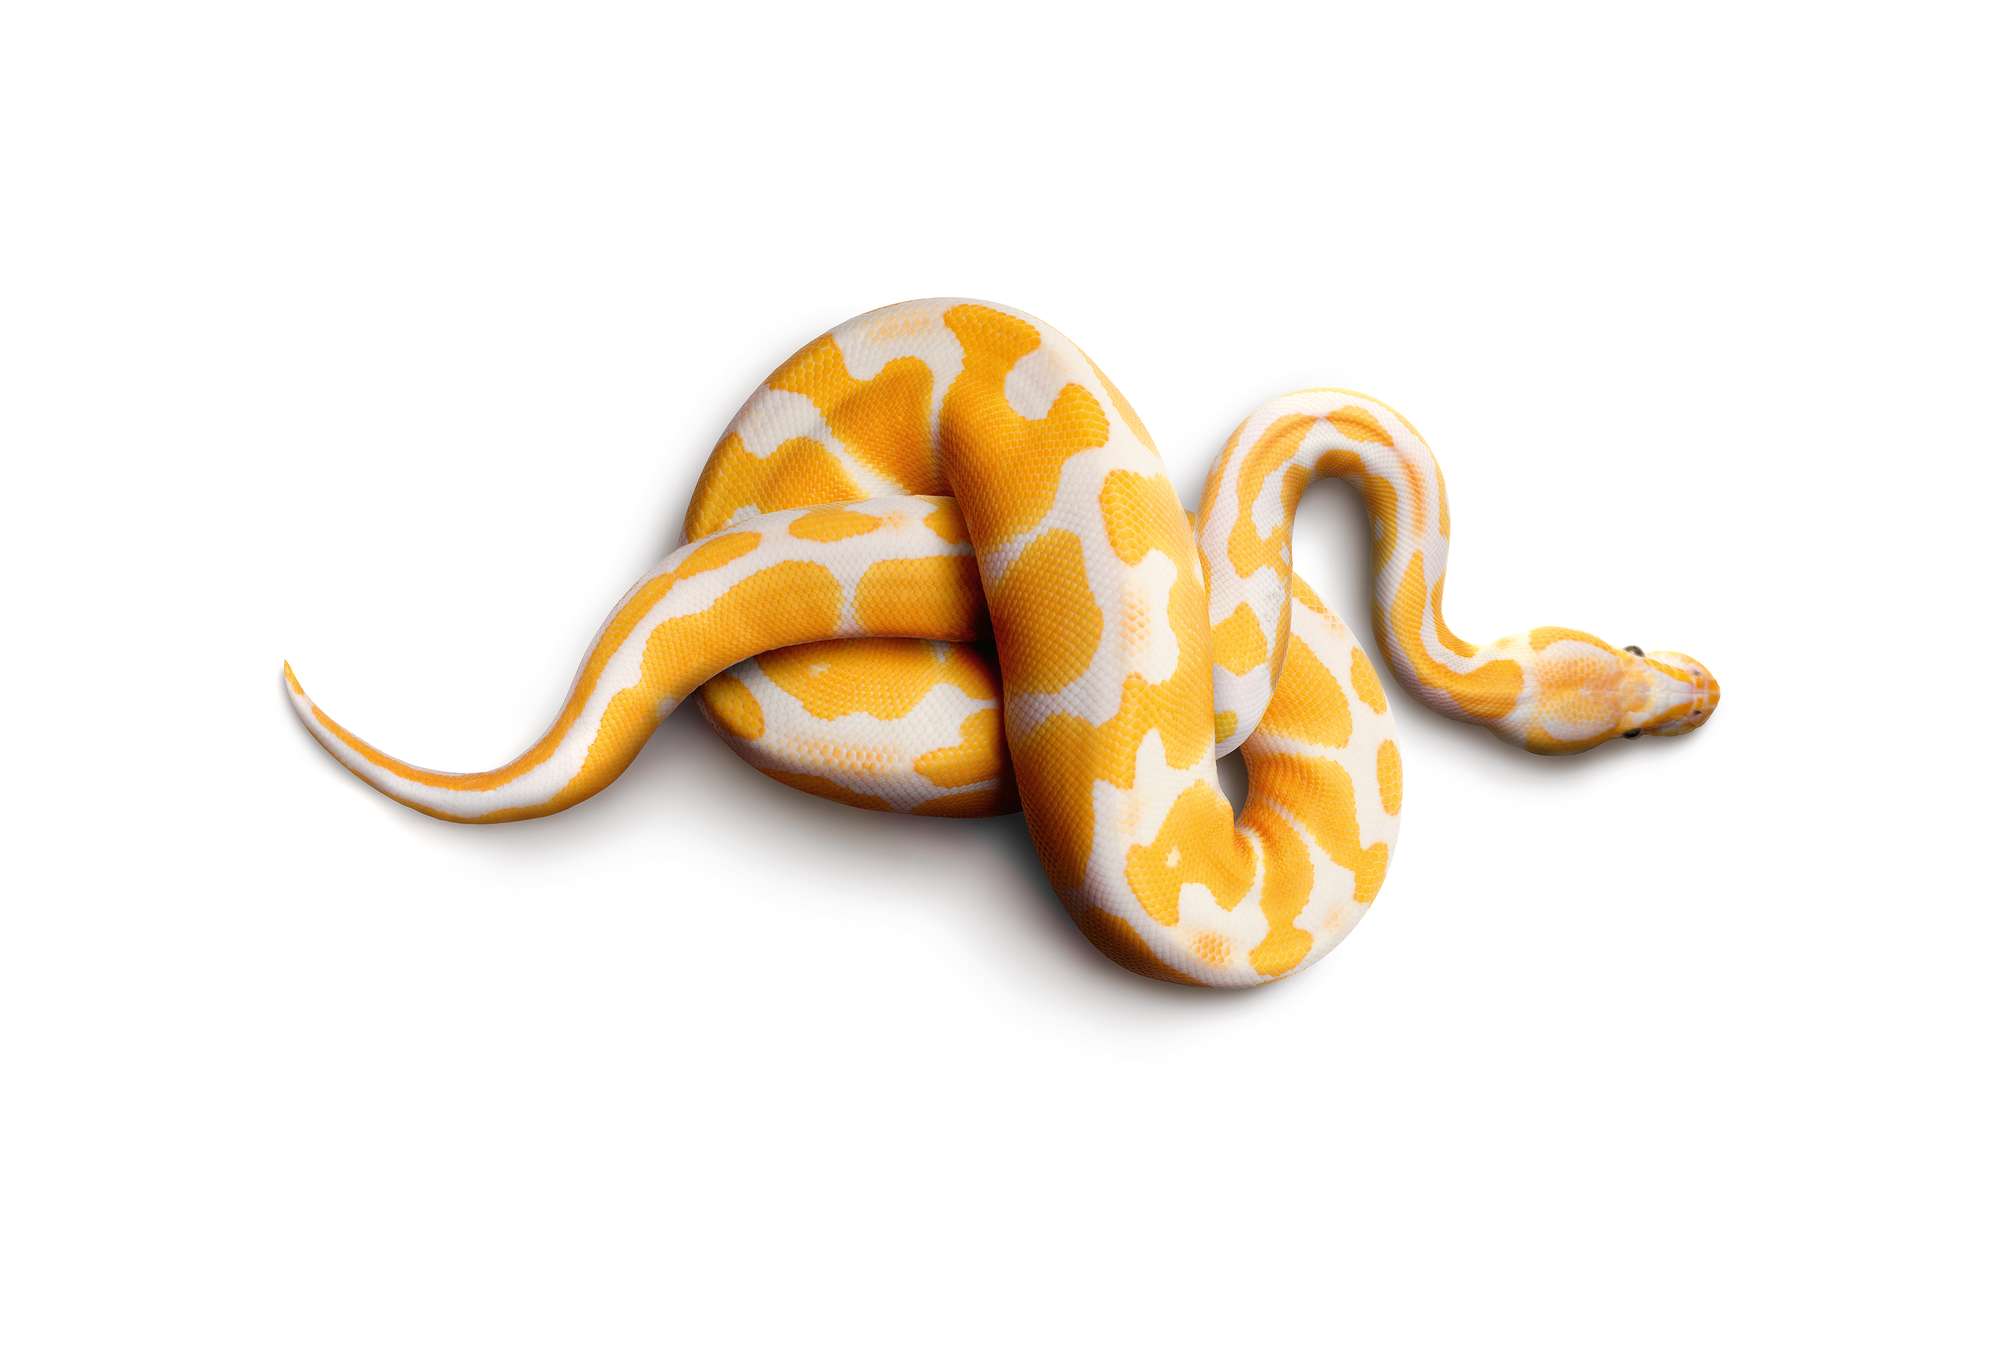             Albino-Python – Fototapete Schlange
        